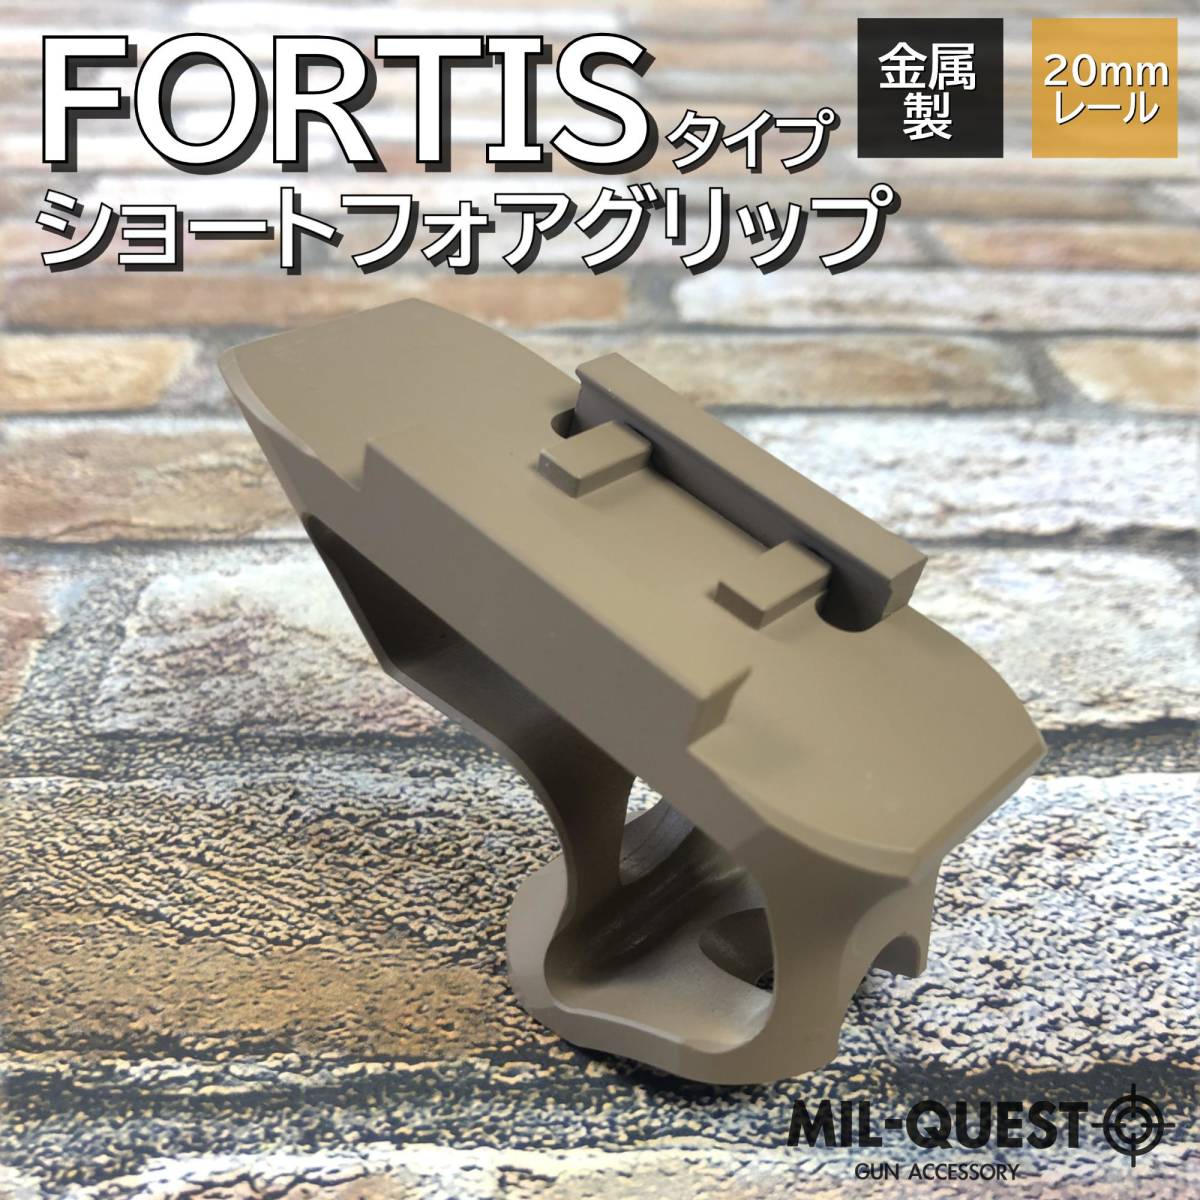 FORTIS SHIFTタイプ ショート フォアグリップ 金属製 20mmレール対応